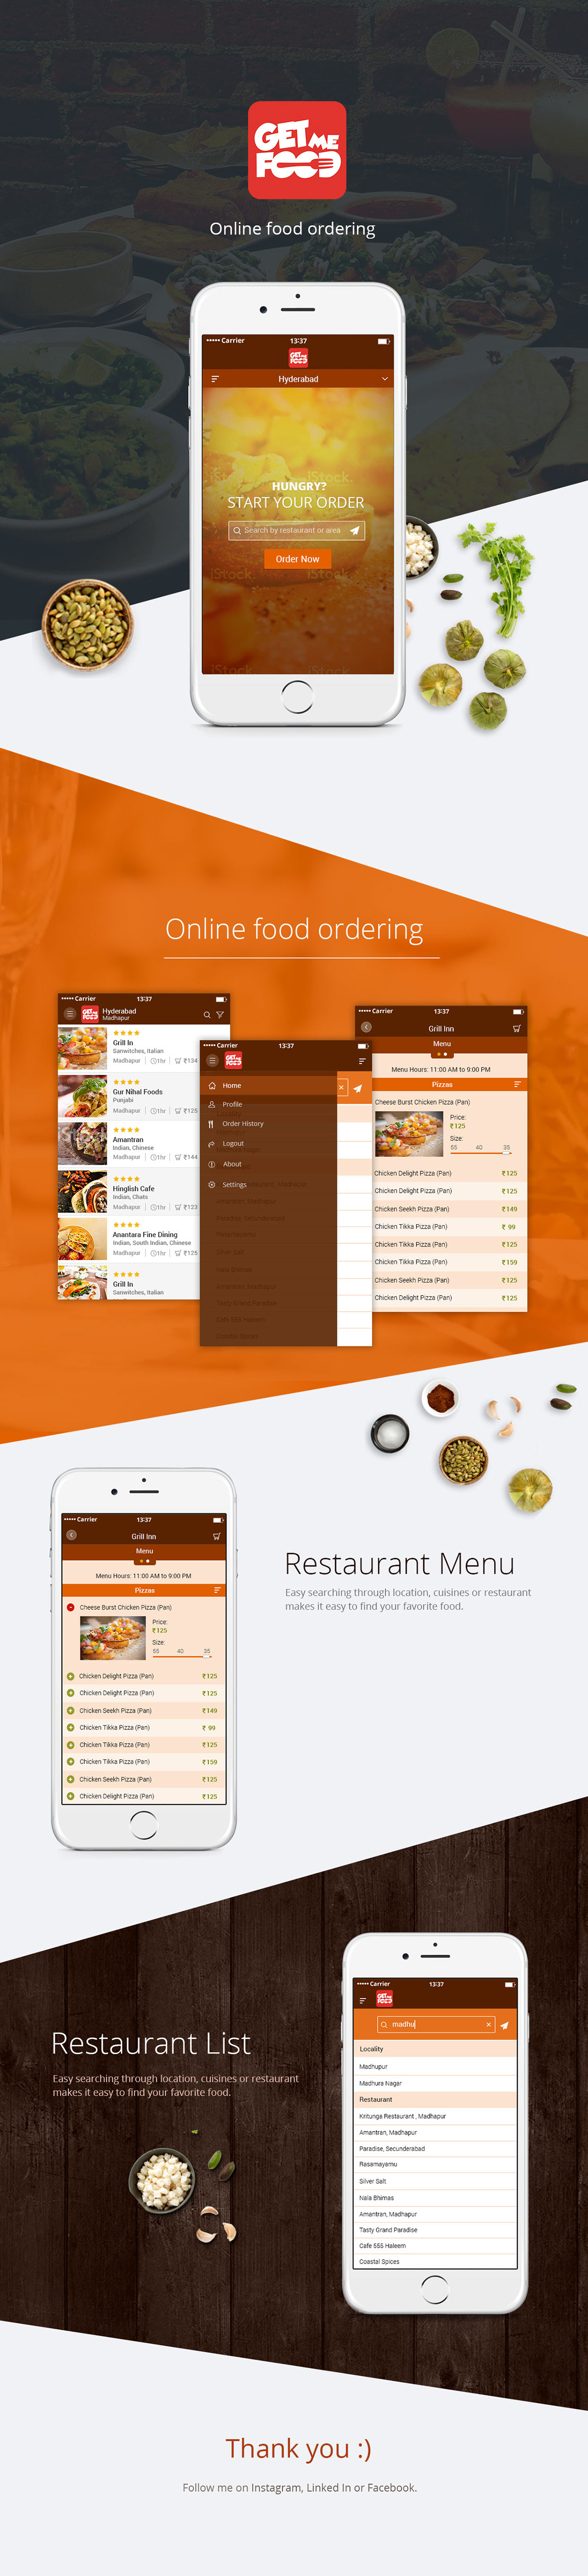 UI ux app design Food 